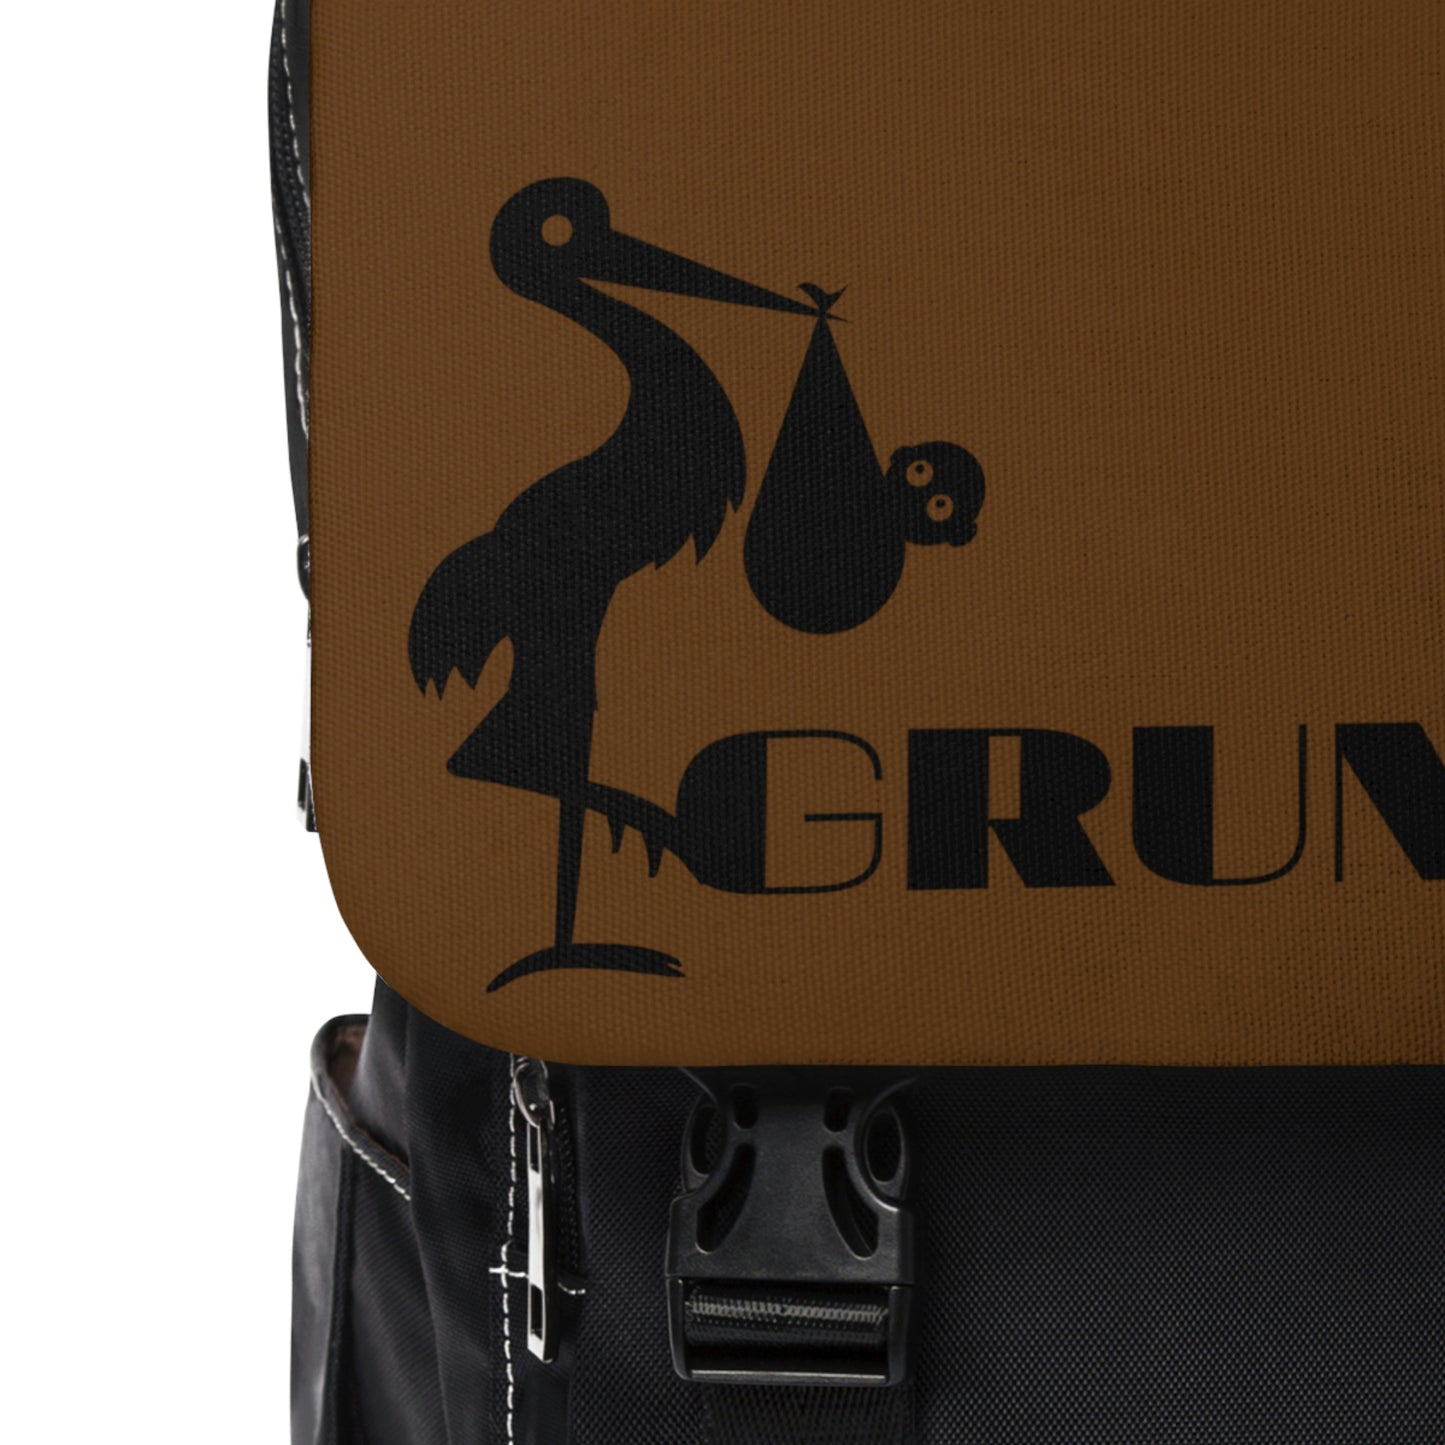 GRUMONH - Unisex Casual Shoulder Backpack